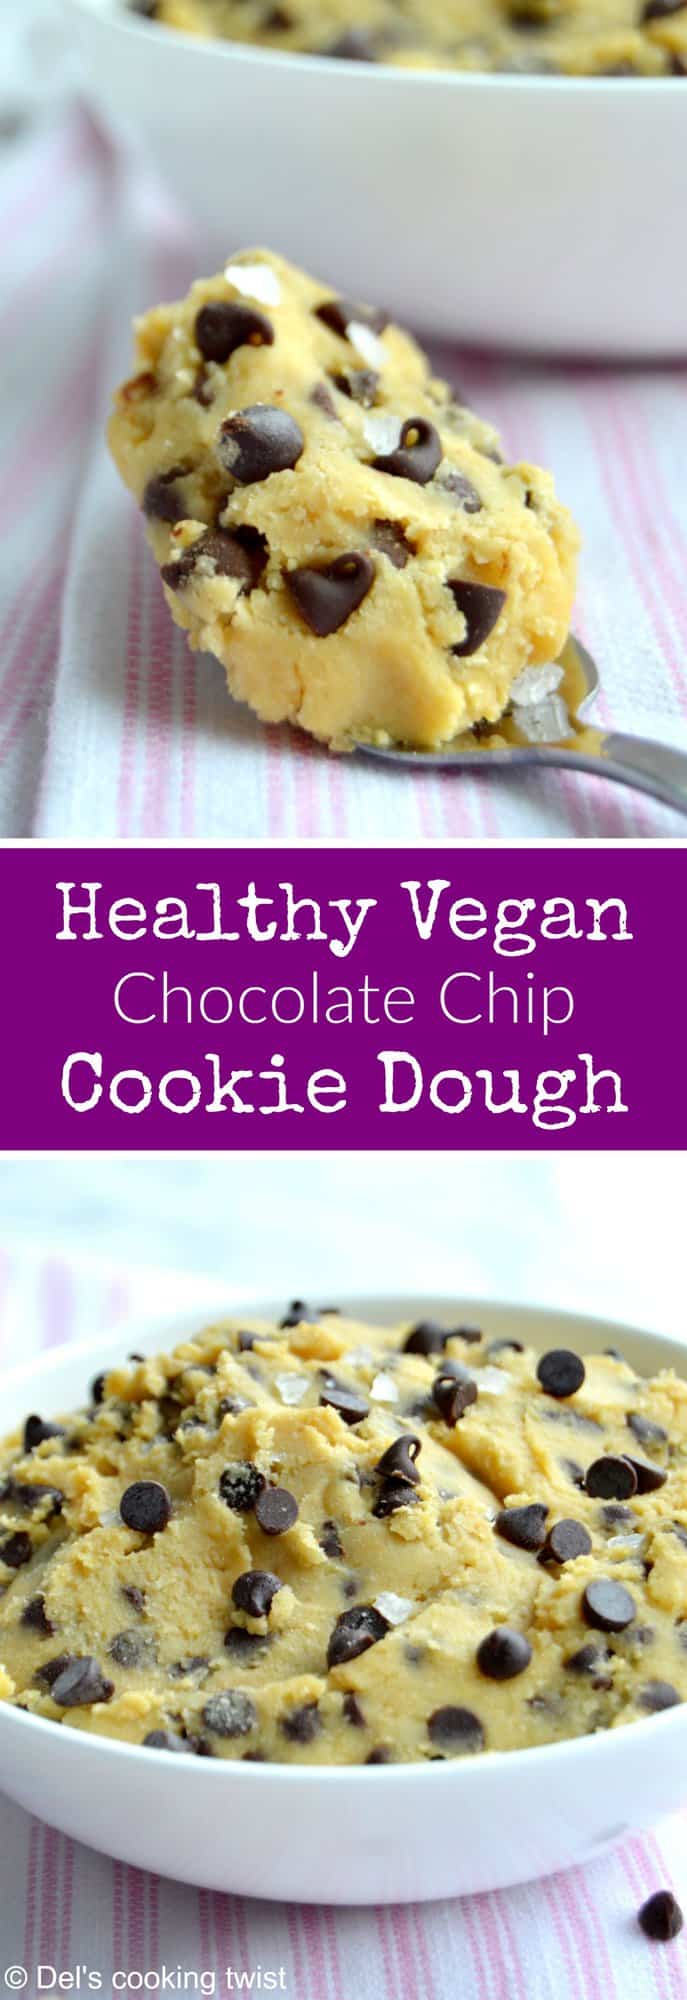 Healthy Vegan Chocolate Chip Cookie Dough